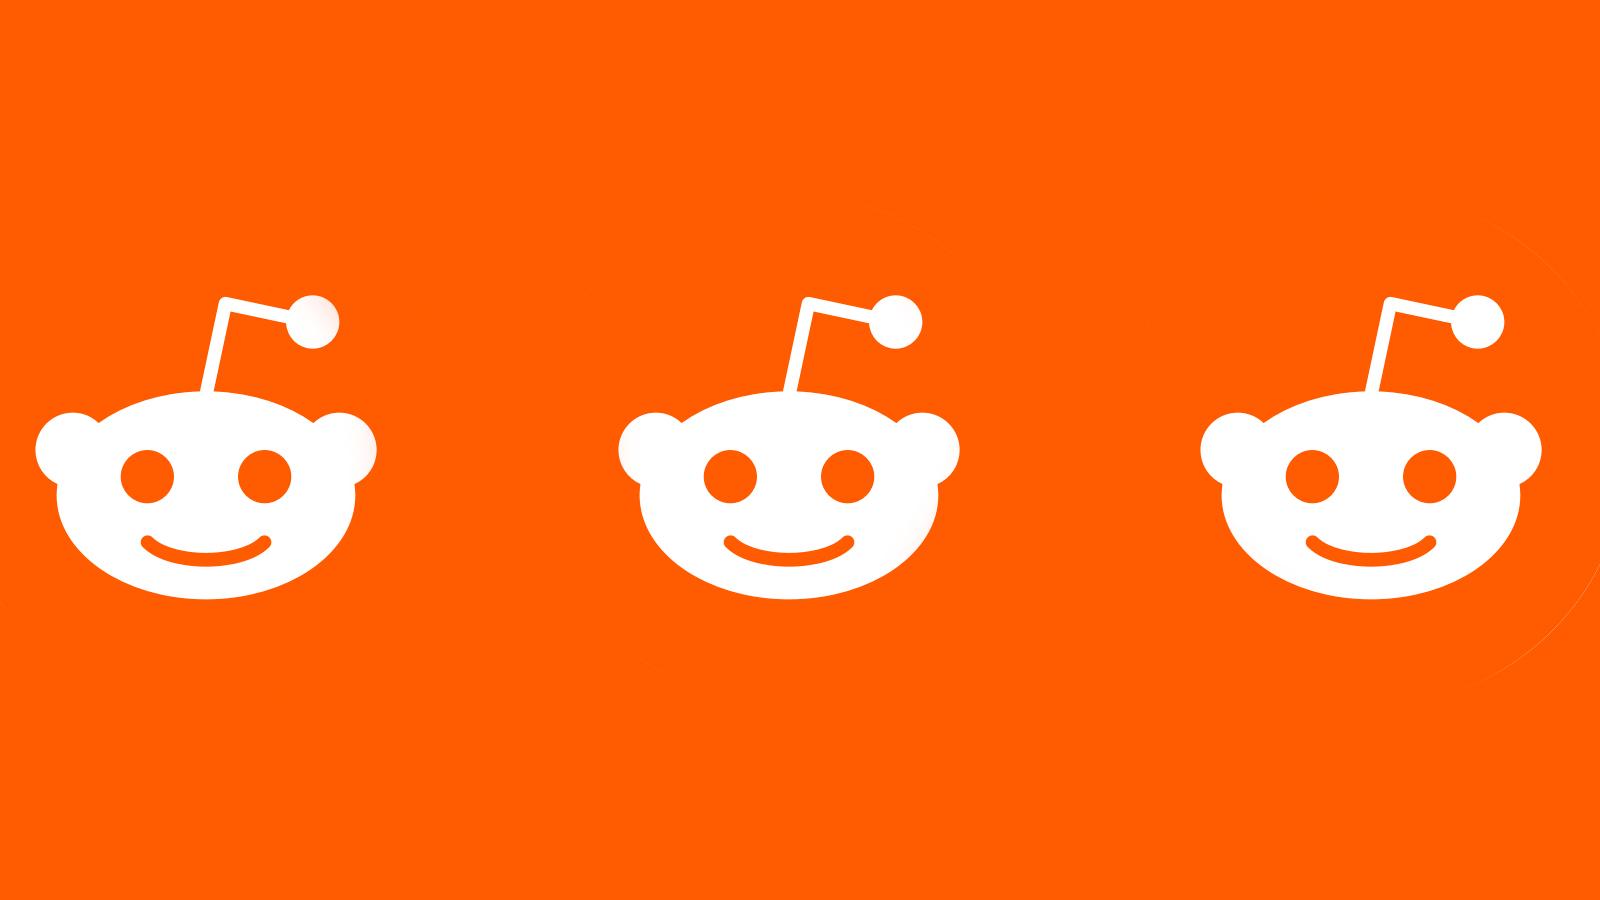 reddit logo three times on orange background